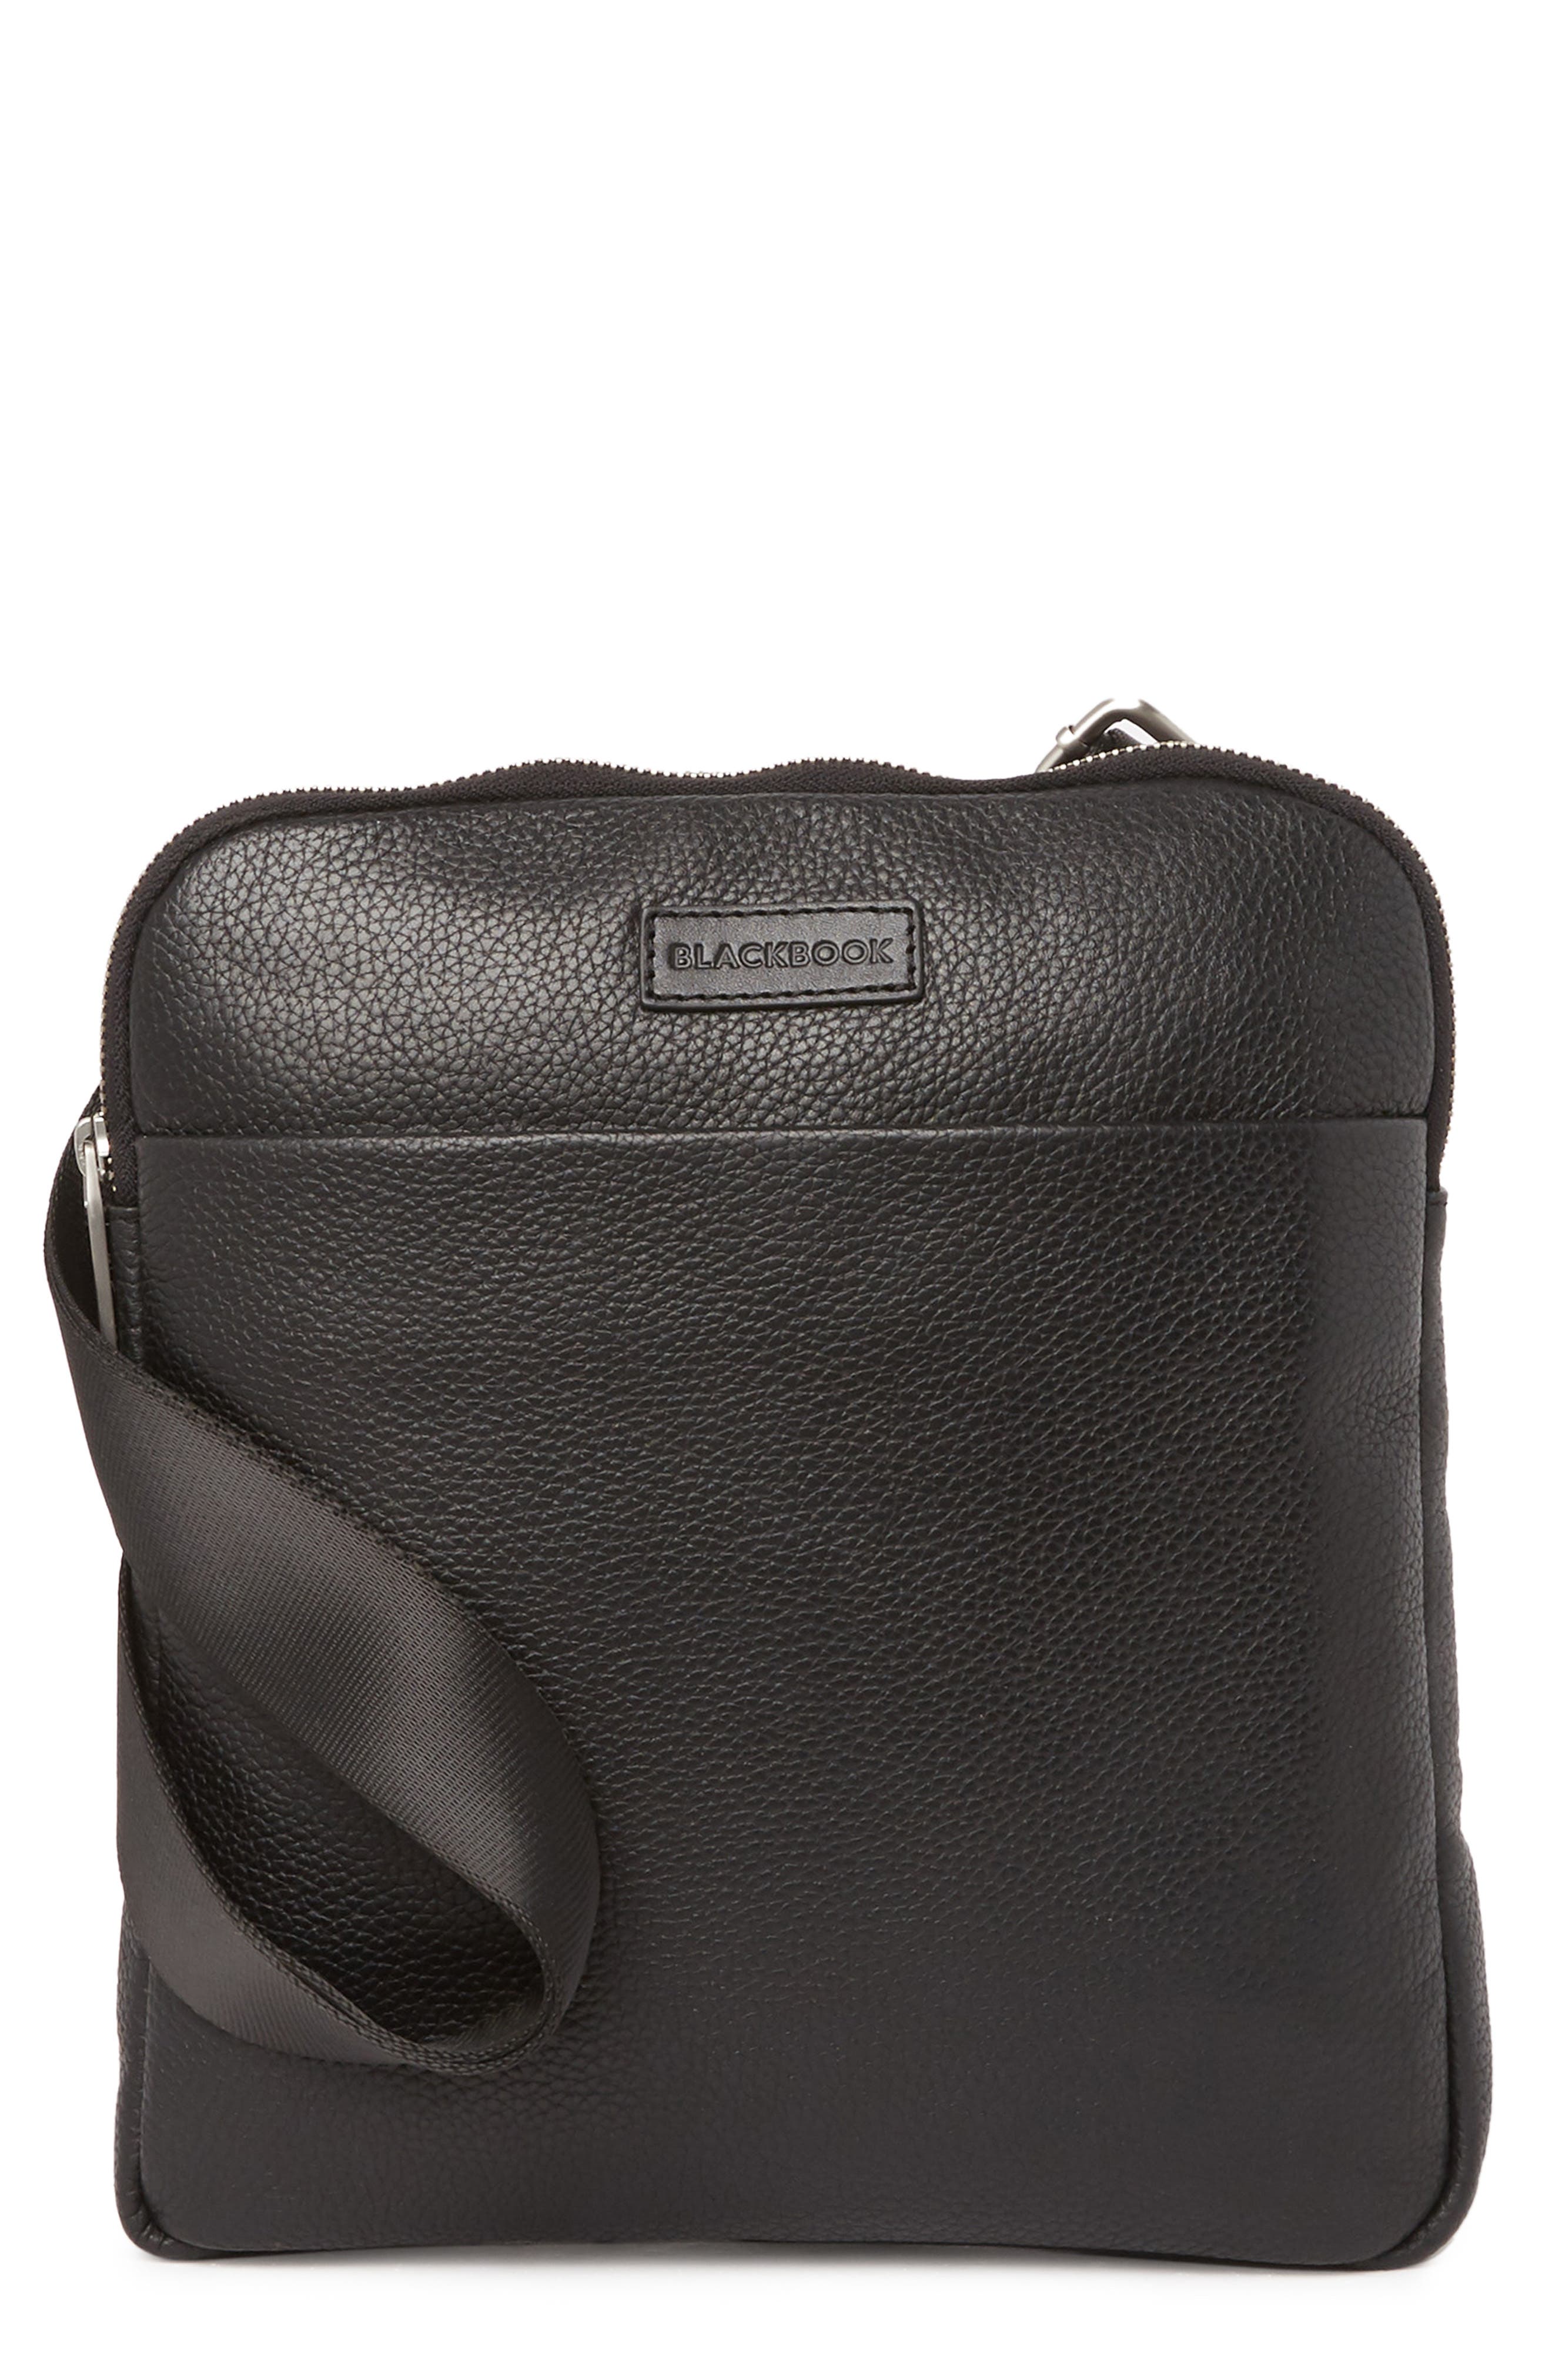 Bugatti Horizon 2 Blackbook Leather Crossbody Bag